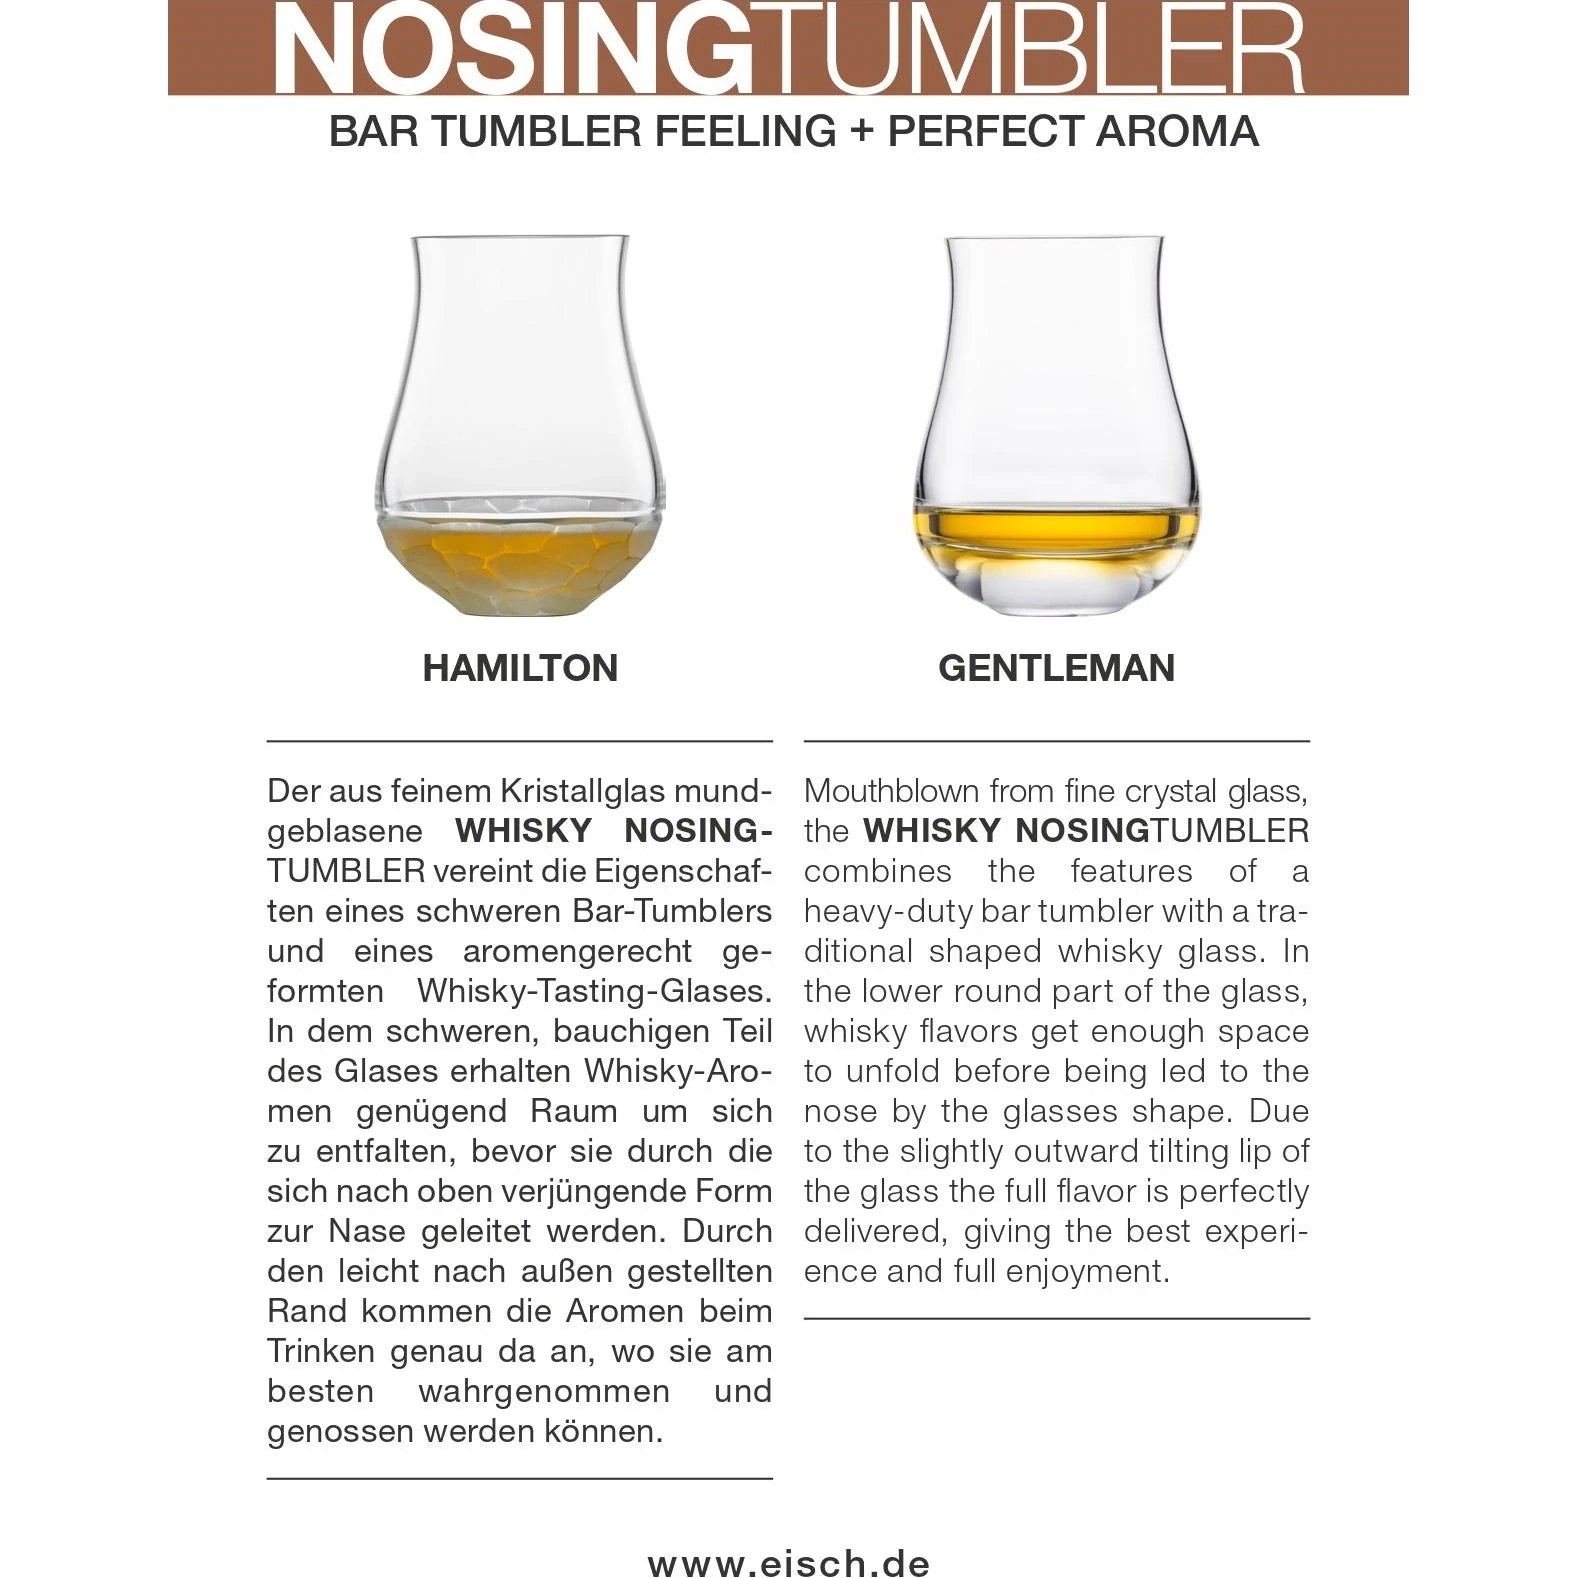 Eisch Whisky Nosing Tumbler Gentleman - 2 Stück in Geschenkröhre 128/8 perfektes Aroma